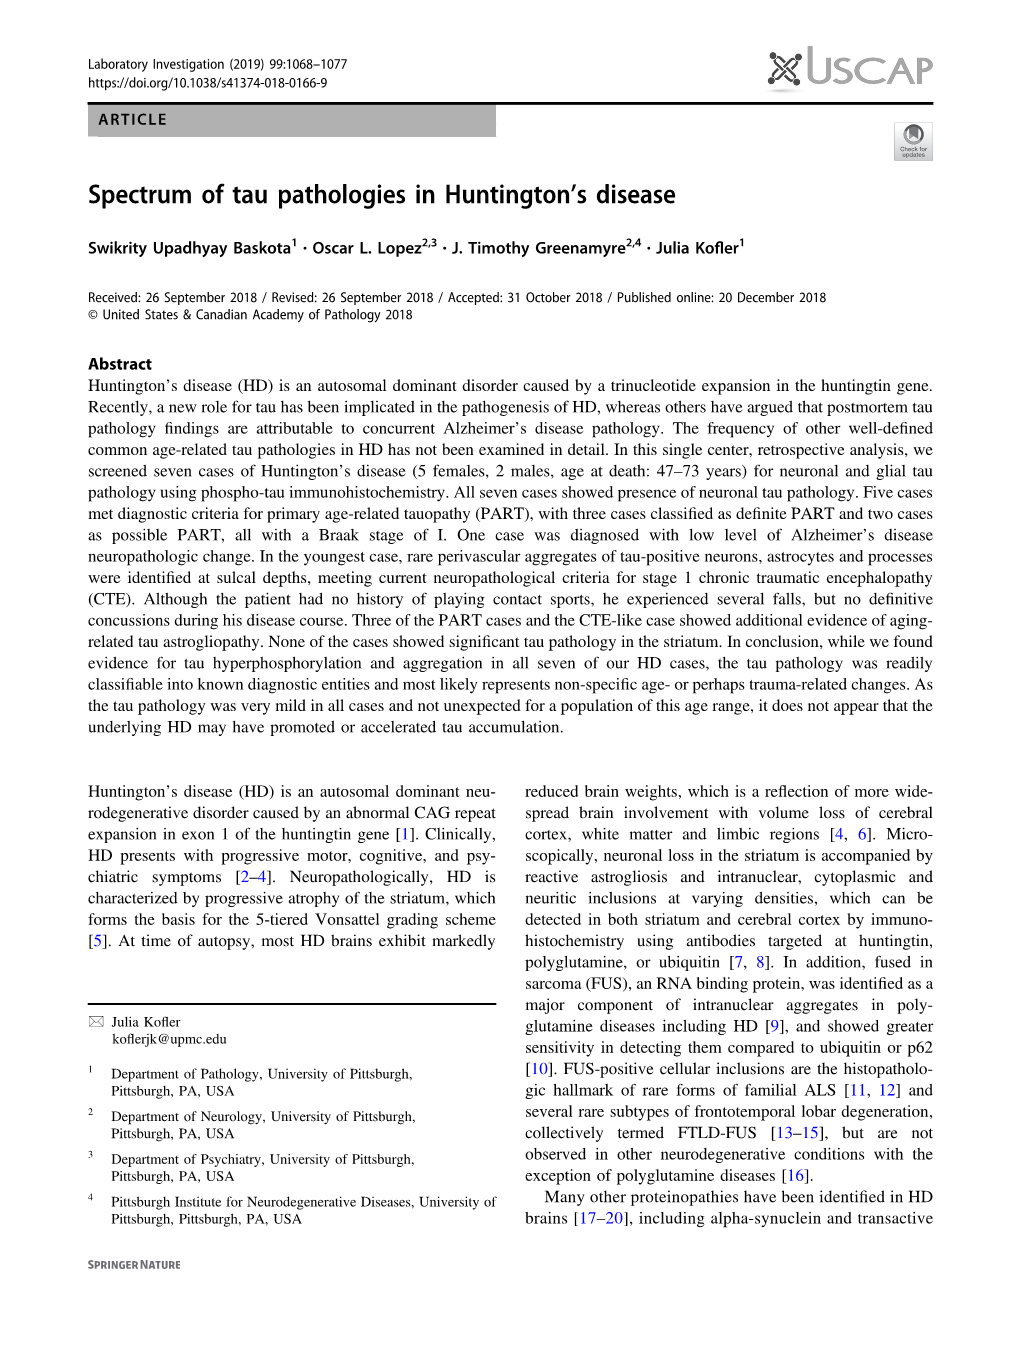 Spectrum of Tau Pathologies in Huntingtonâ€™S Disease